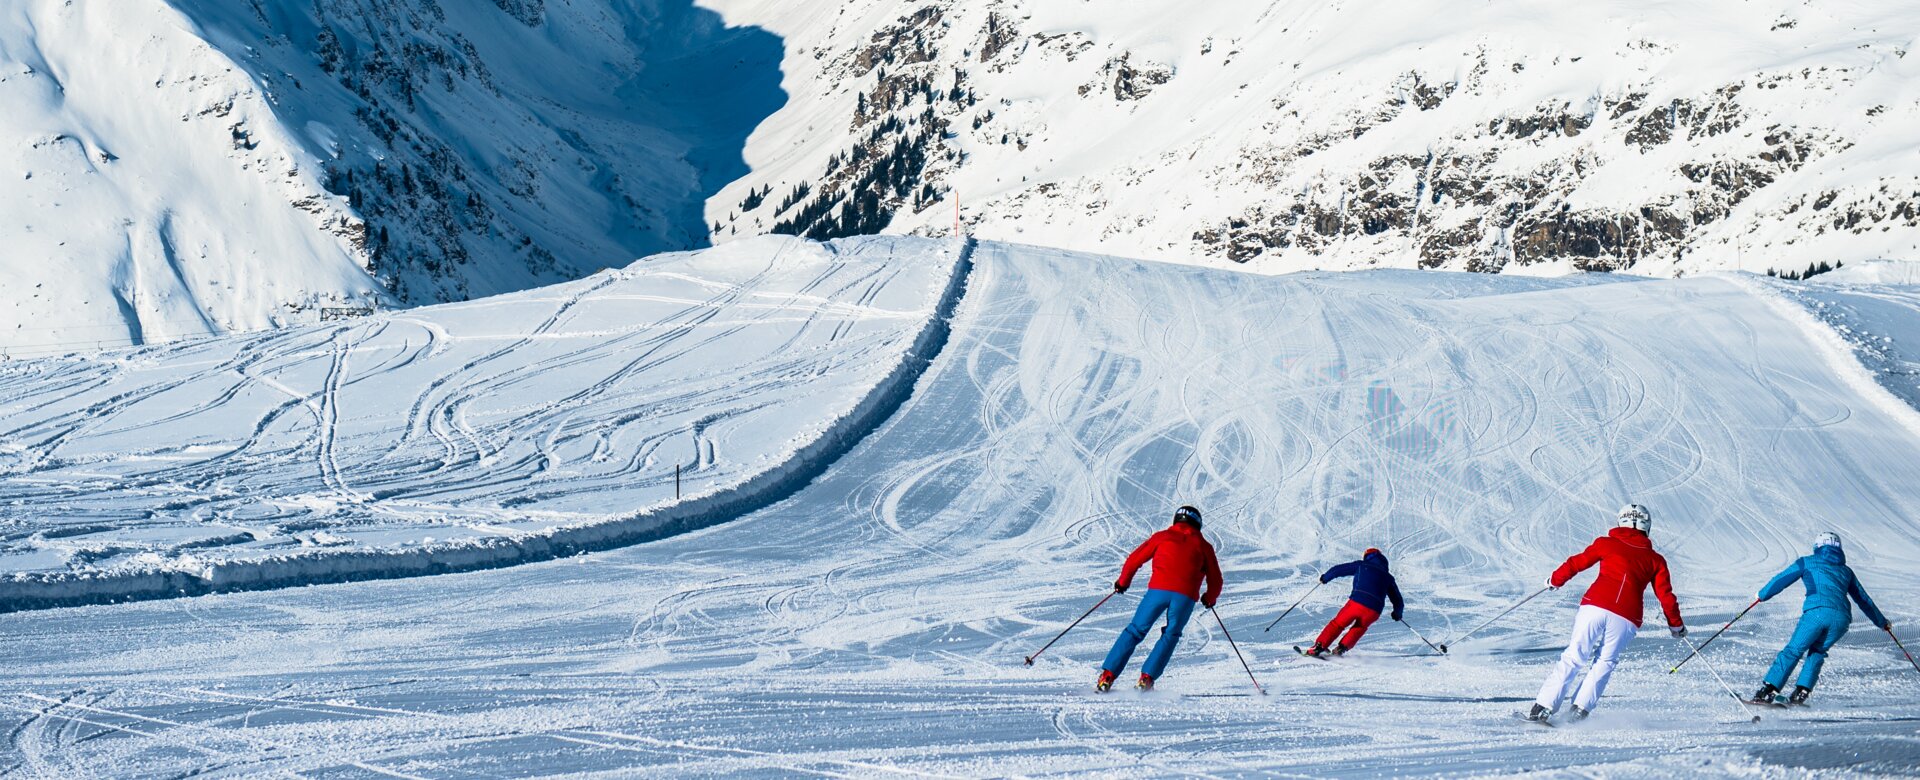 Skiing in Ski amadé - Austria's greatest ski paradise